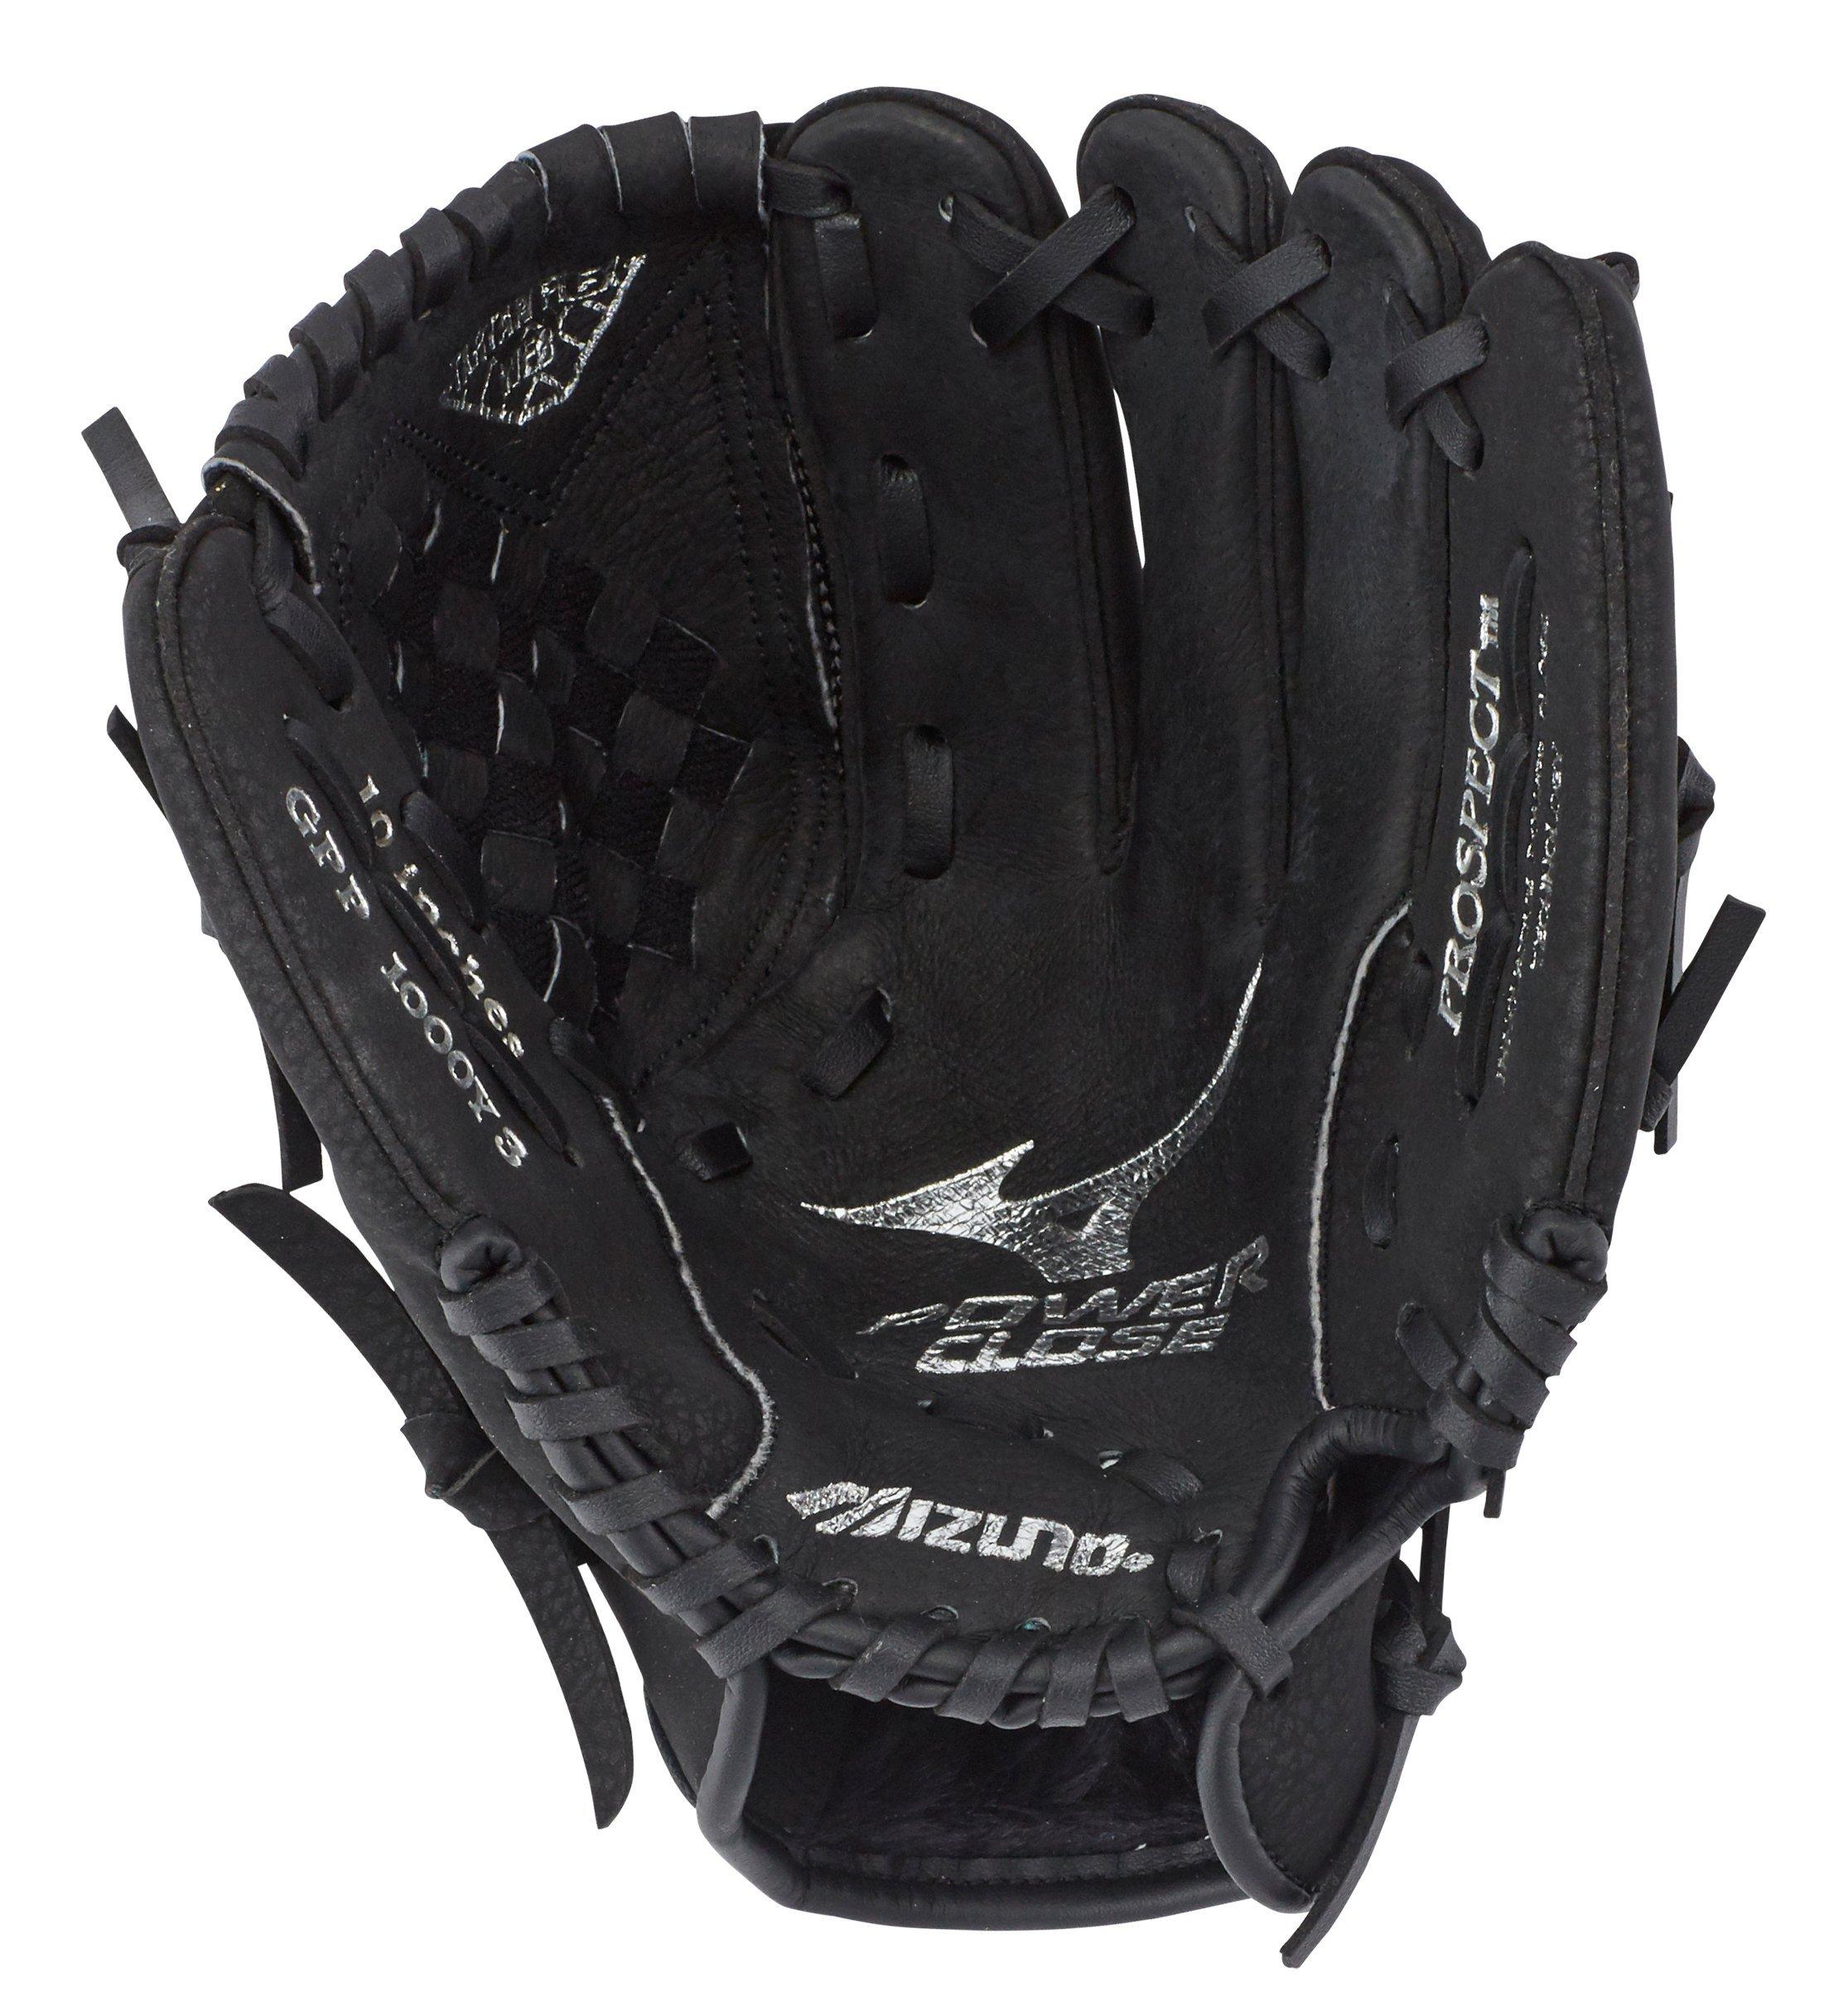 10 Inch Youth Baseball Glove, Prospect 